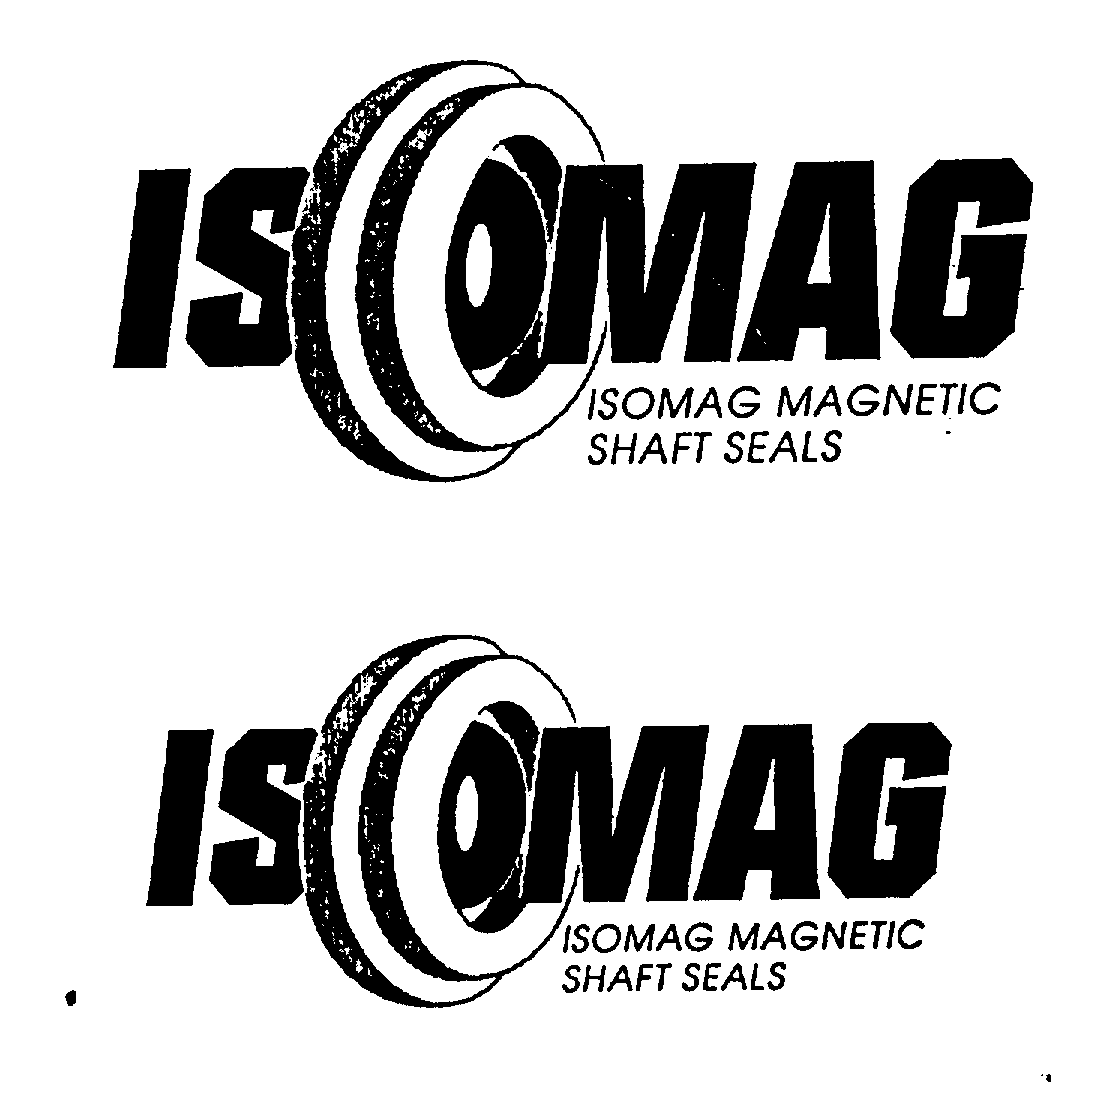  ISOMAG ISOMAG MAGNETIC SHAFT SEALS ISOMAG ISOMAG MAGNETIC SHAFT SEALS